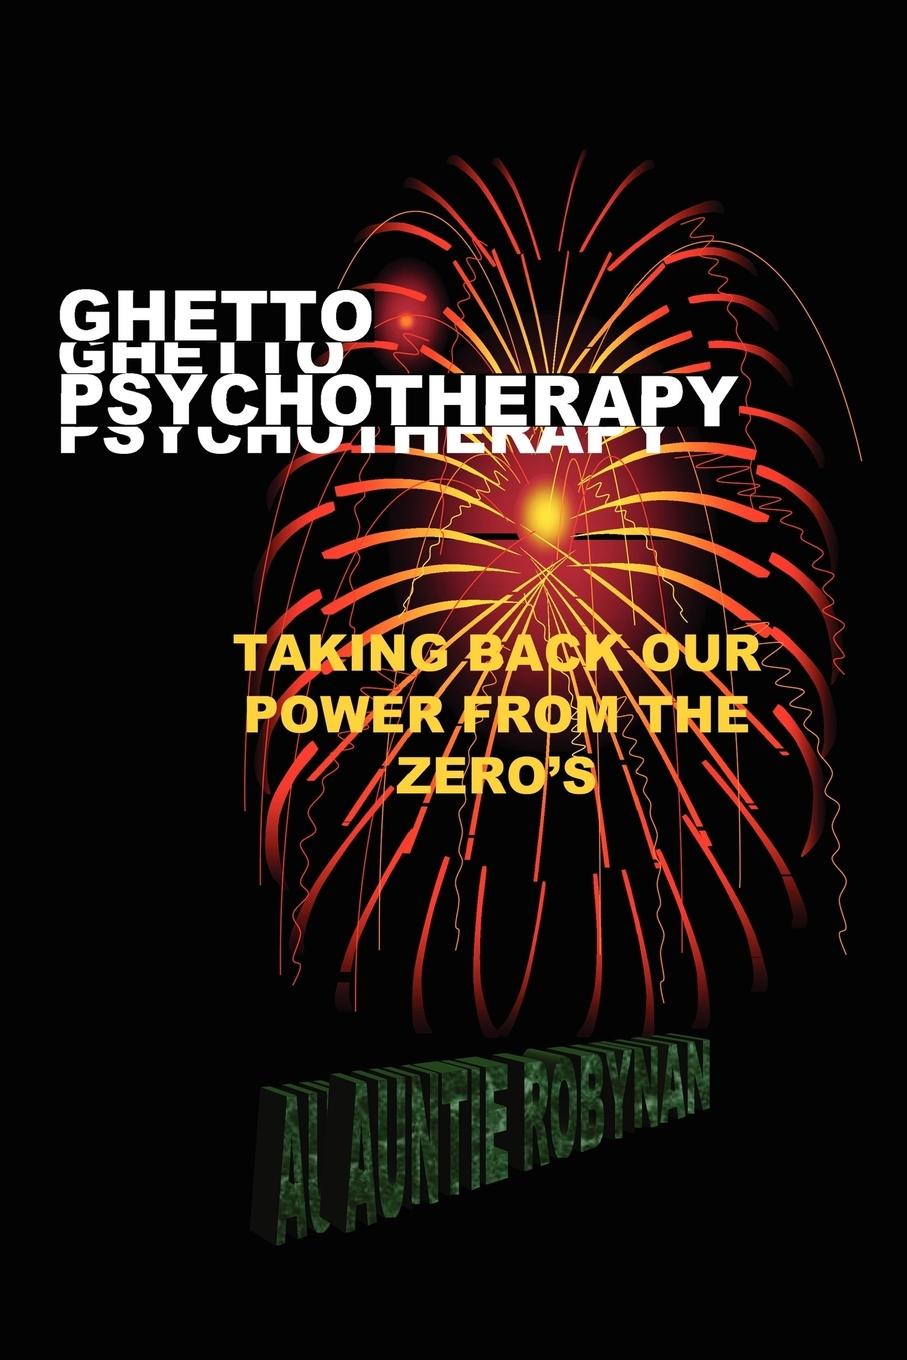 Ghetto Psychotherapy - Auntie Robynan, Robynan Auntie Robynan